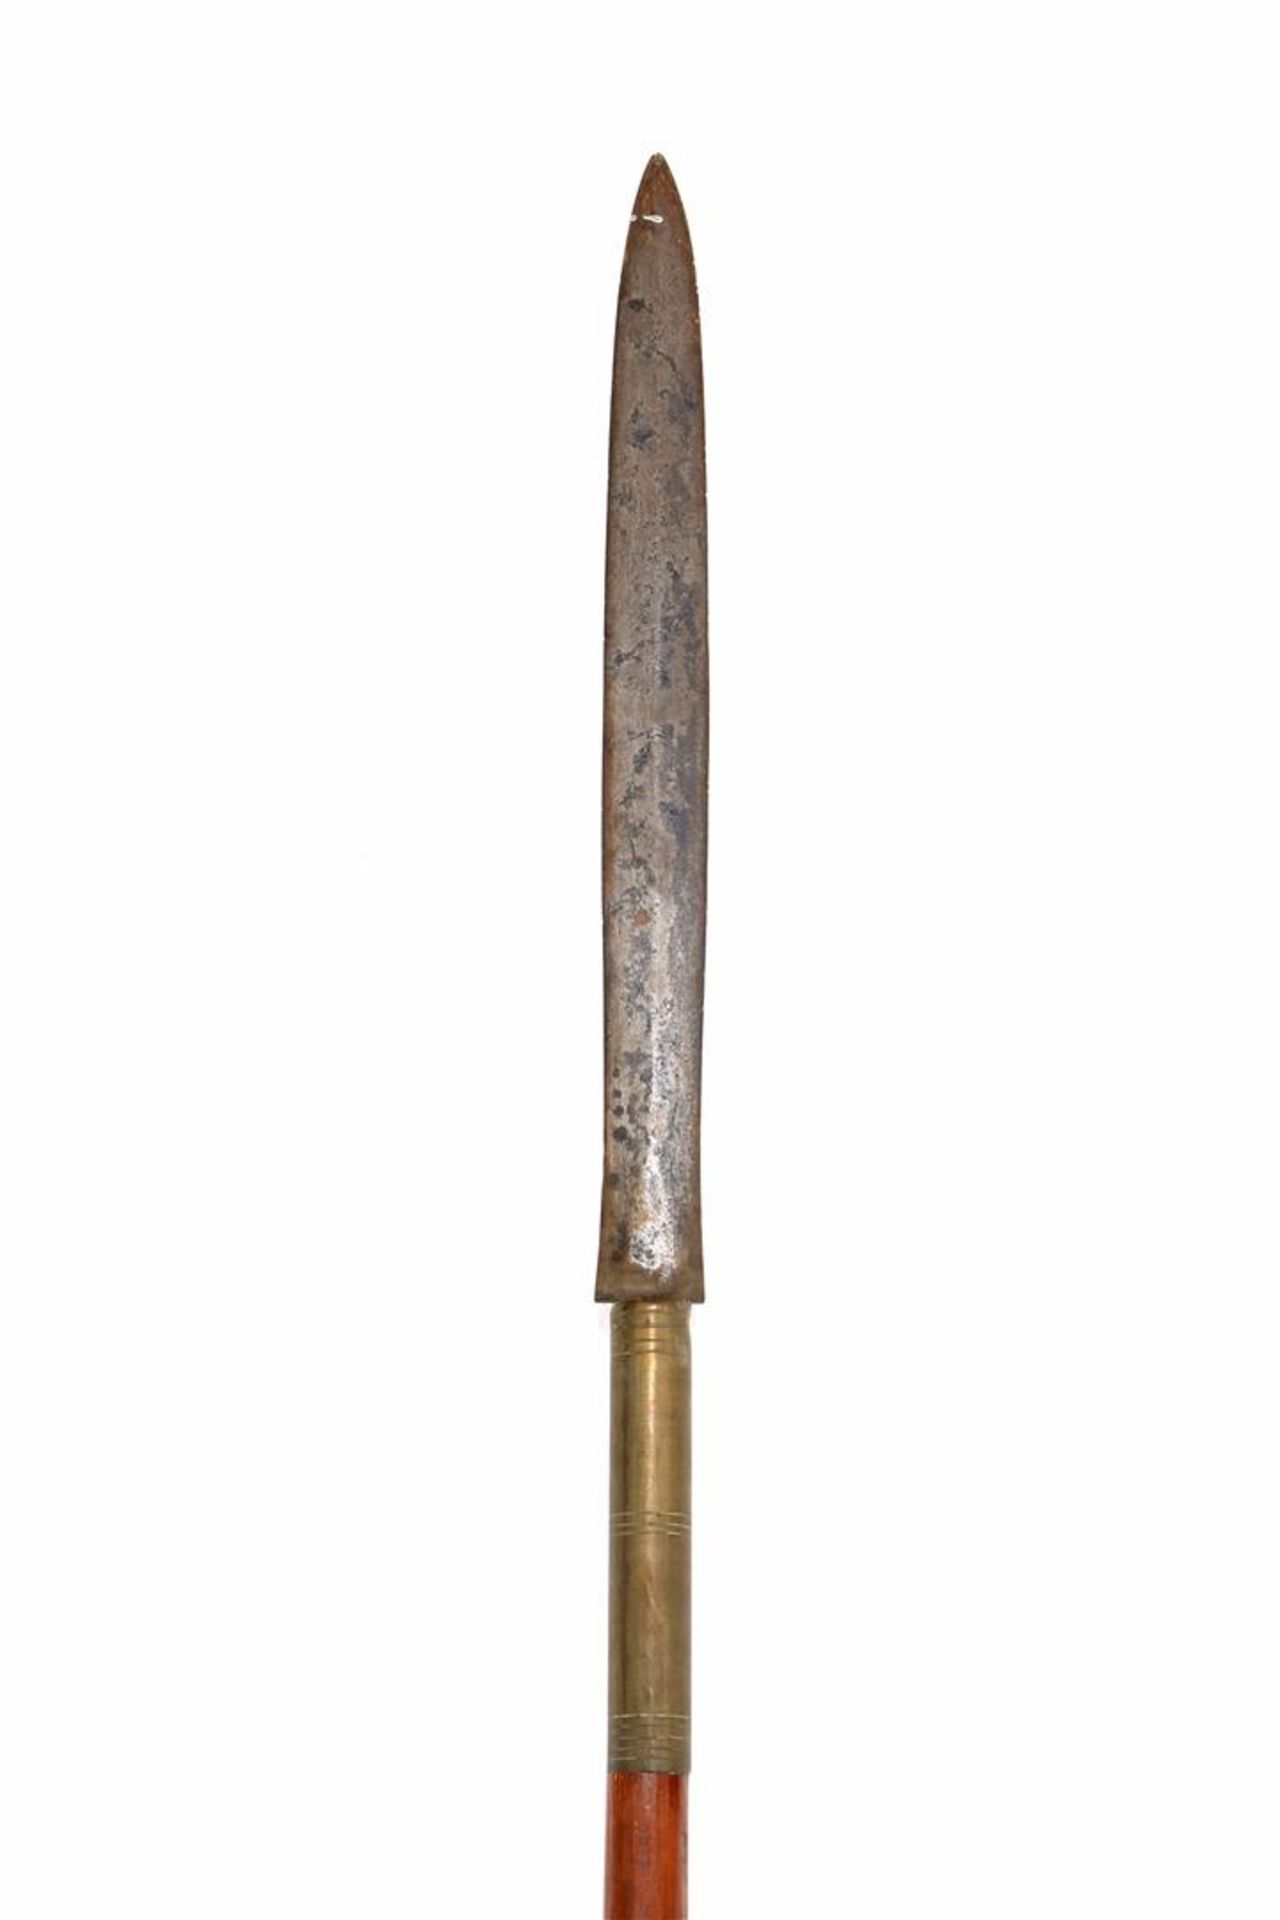 Old wrought iron lance - Image 4 of 5